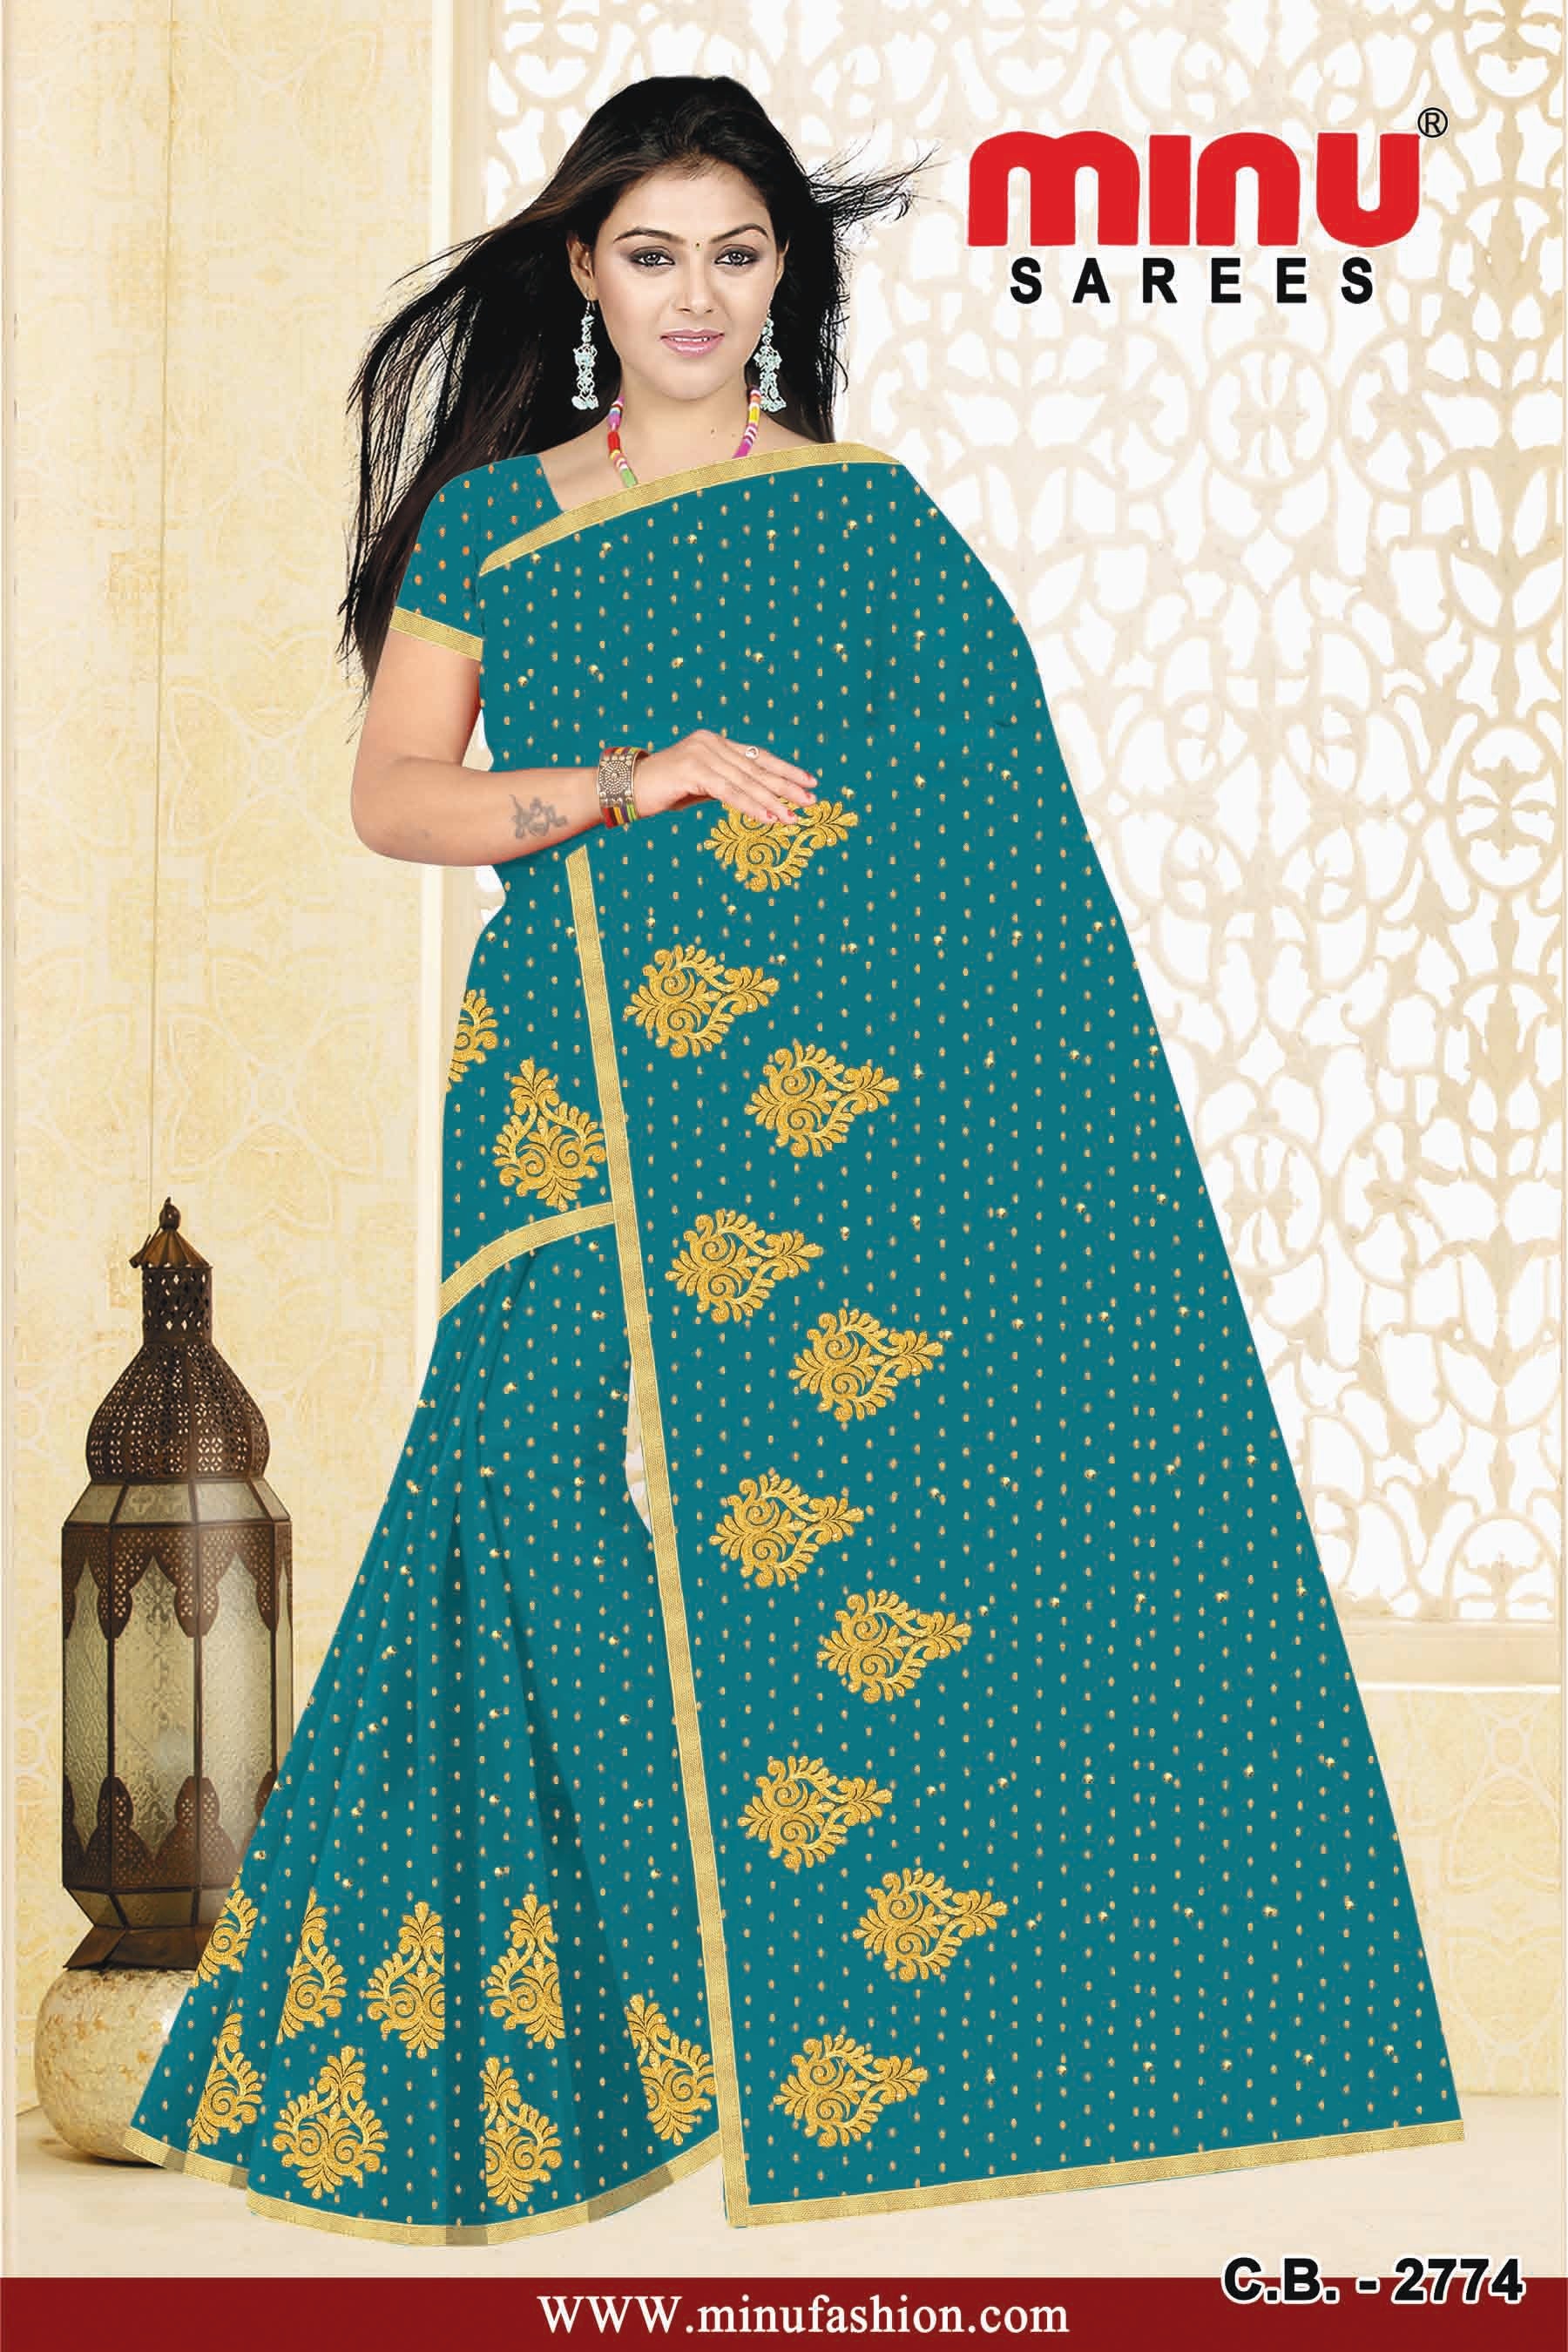 embroidered sarees wholesale inkolkata